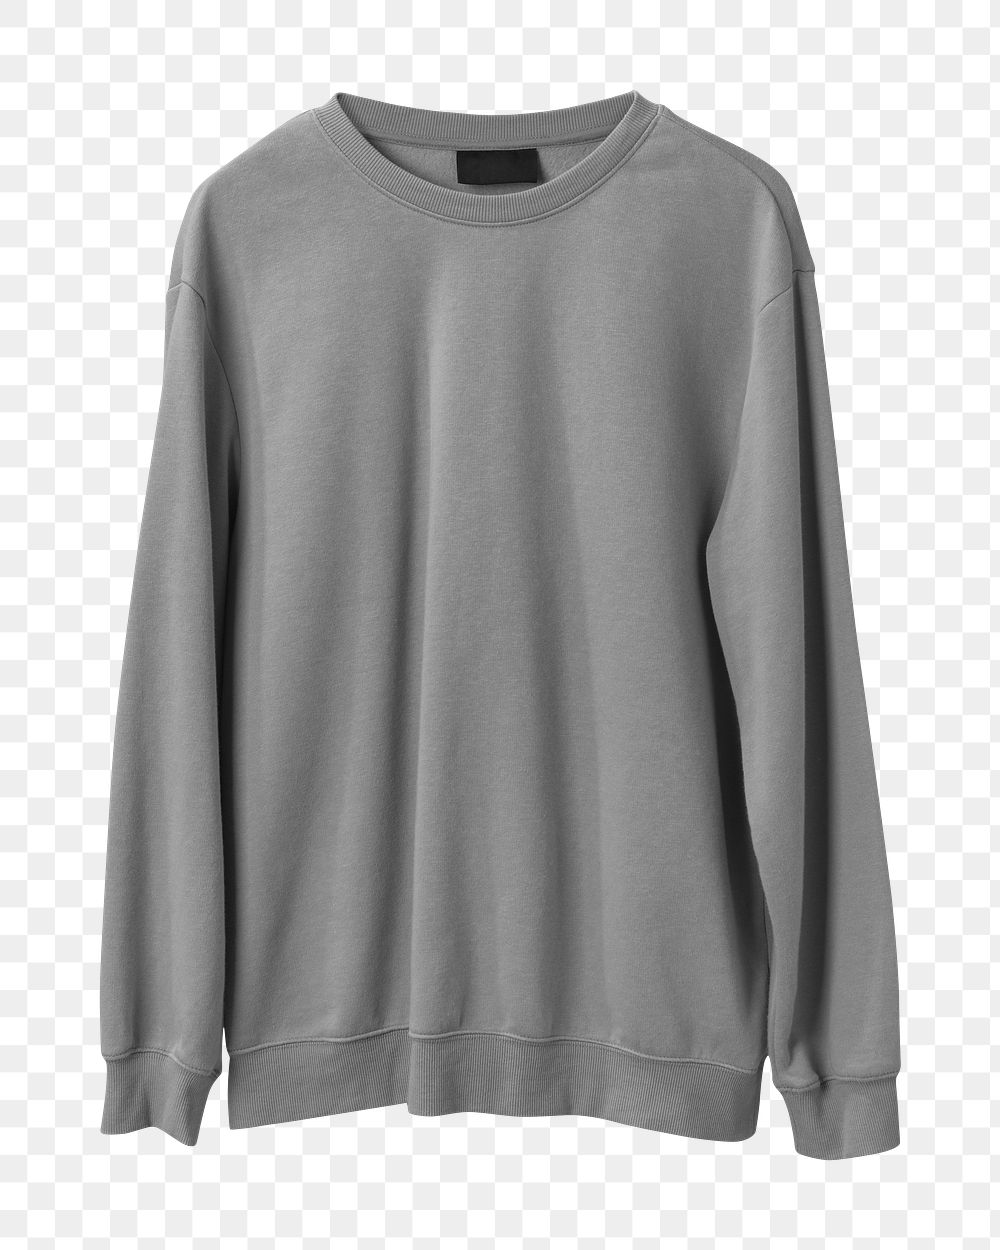 Grey sweater png, winter fashion, | Premium PNG Sticker - rawpixel